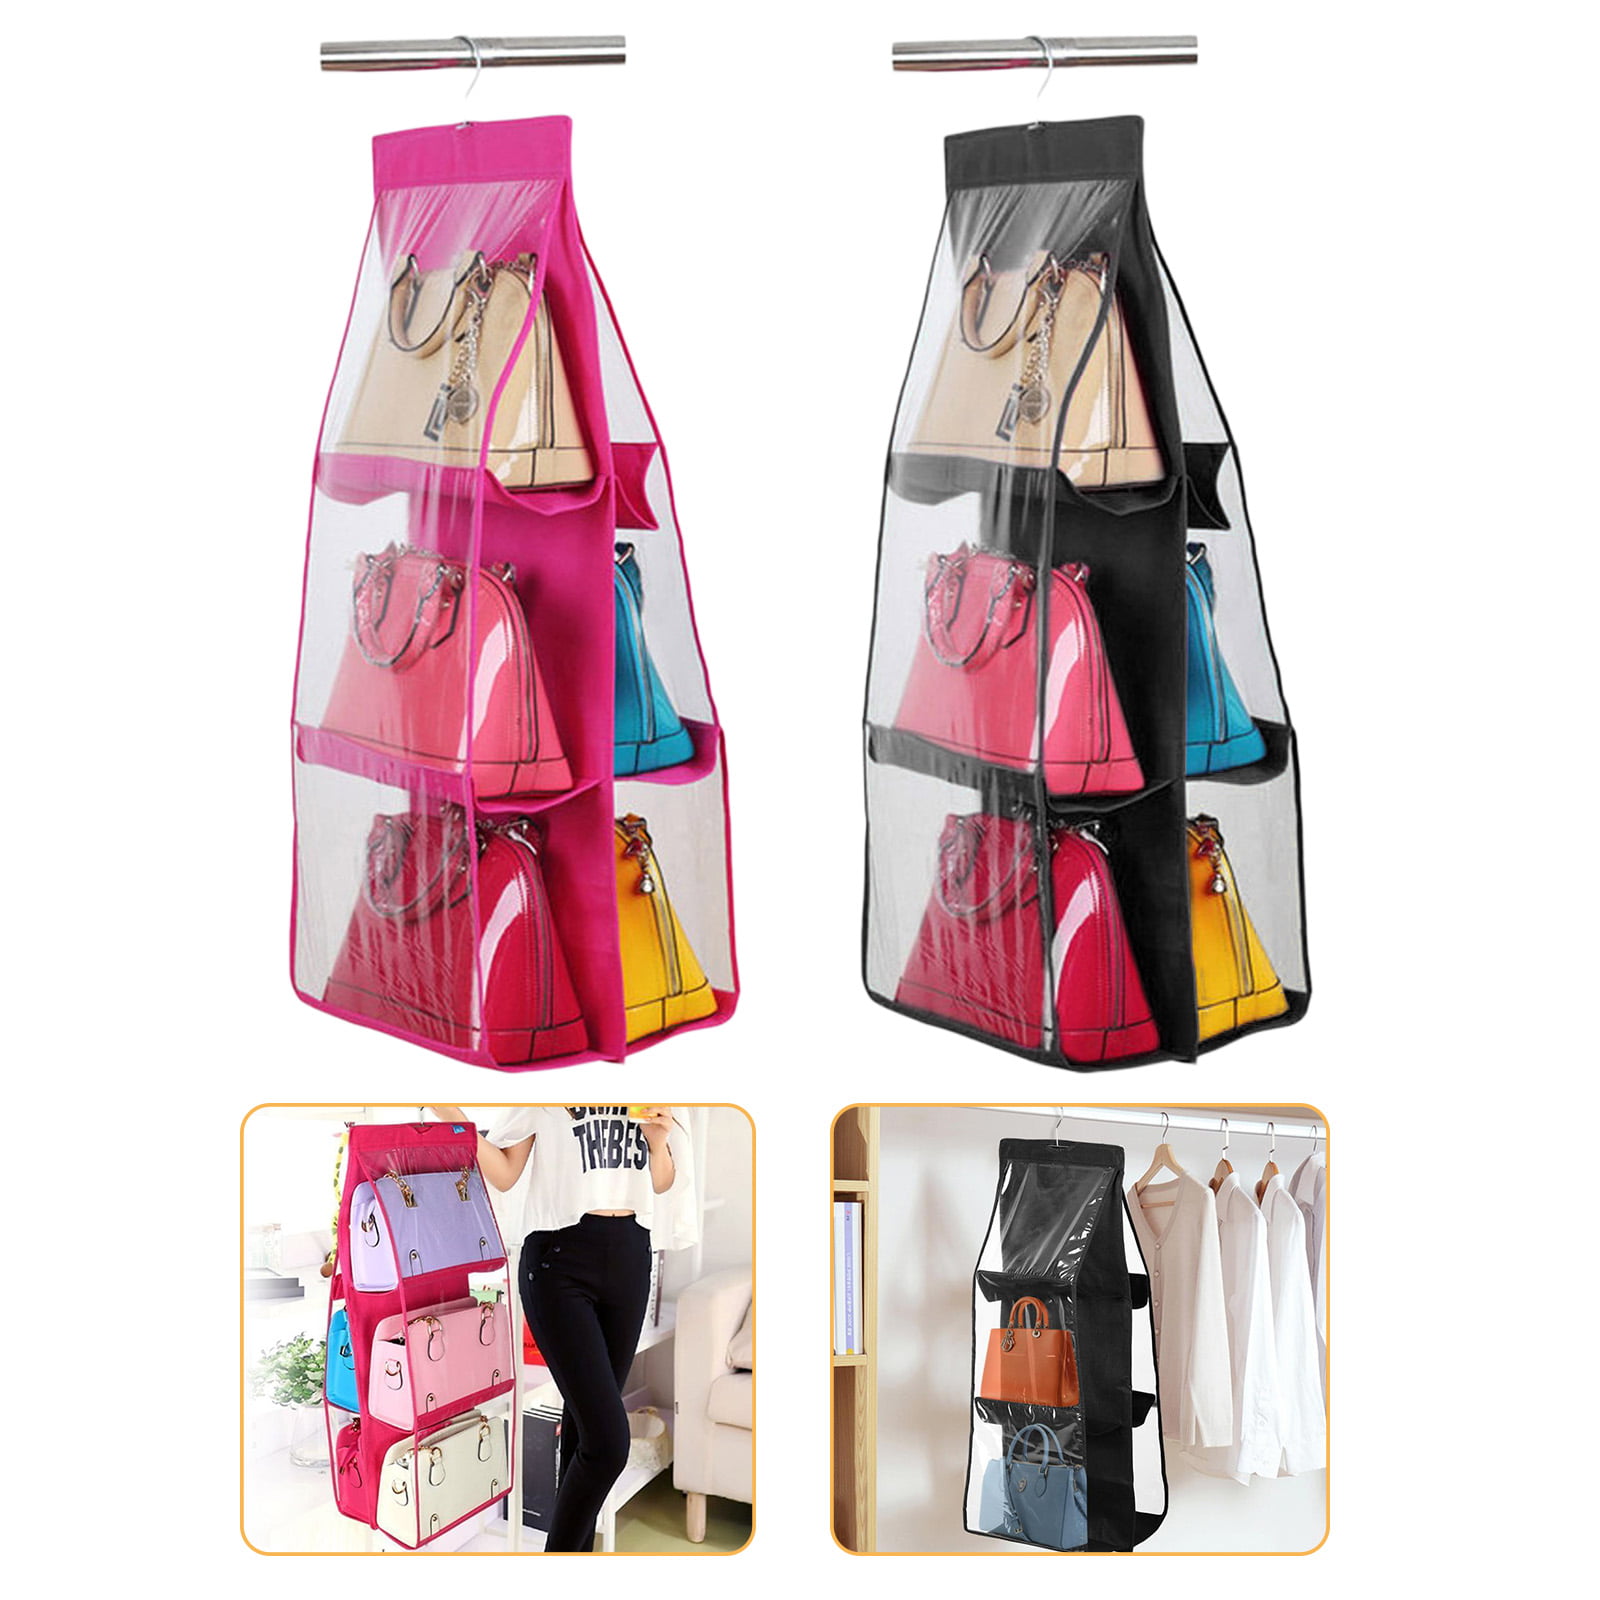 EEEkit 6-Pockets Handbag Storage Bag Organizer, Anti-dust Cover Large Clear Bag Purse, Home ...